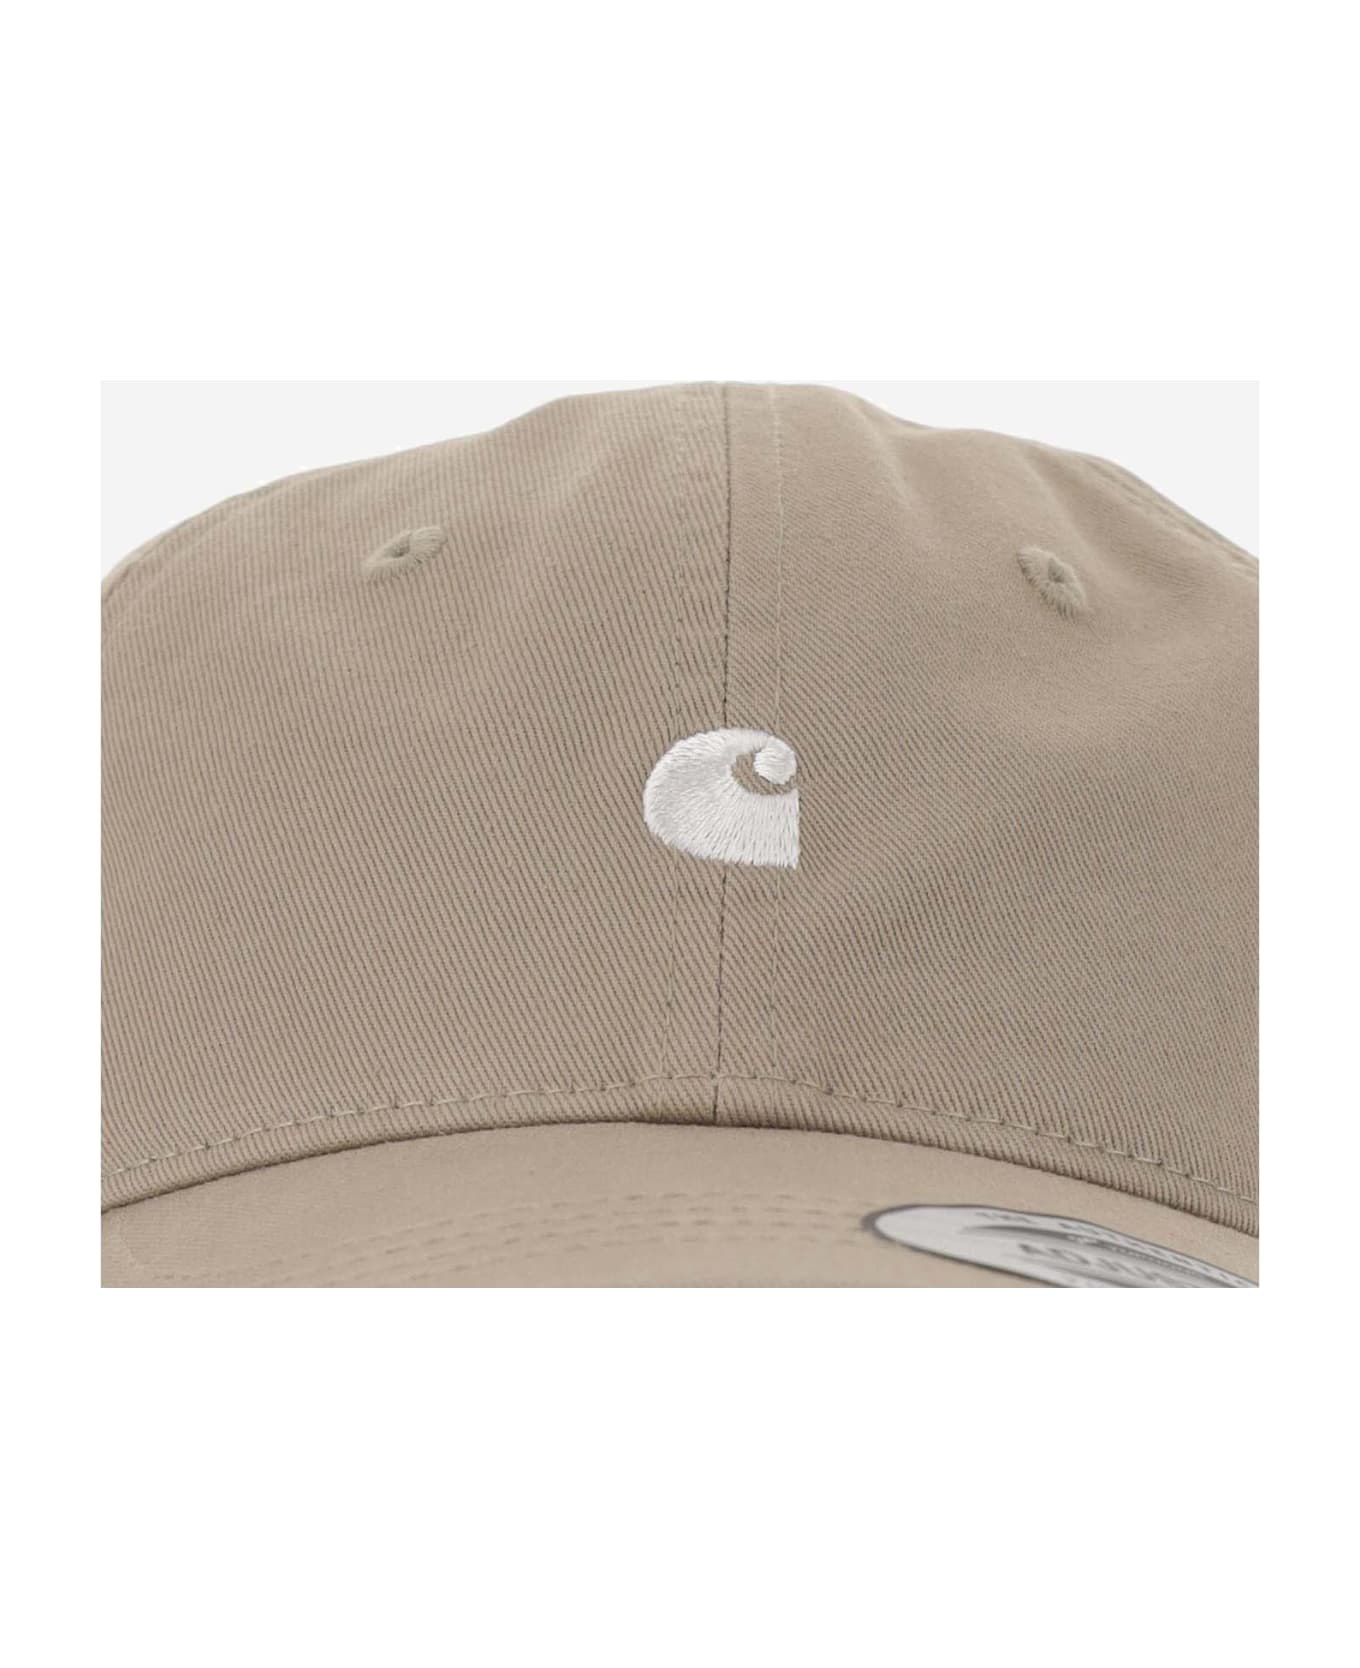 Carhartt Canvas Hat With Logo - Beige